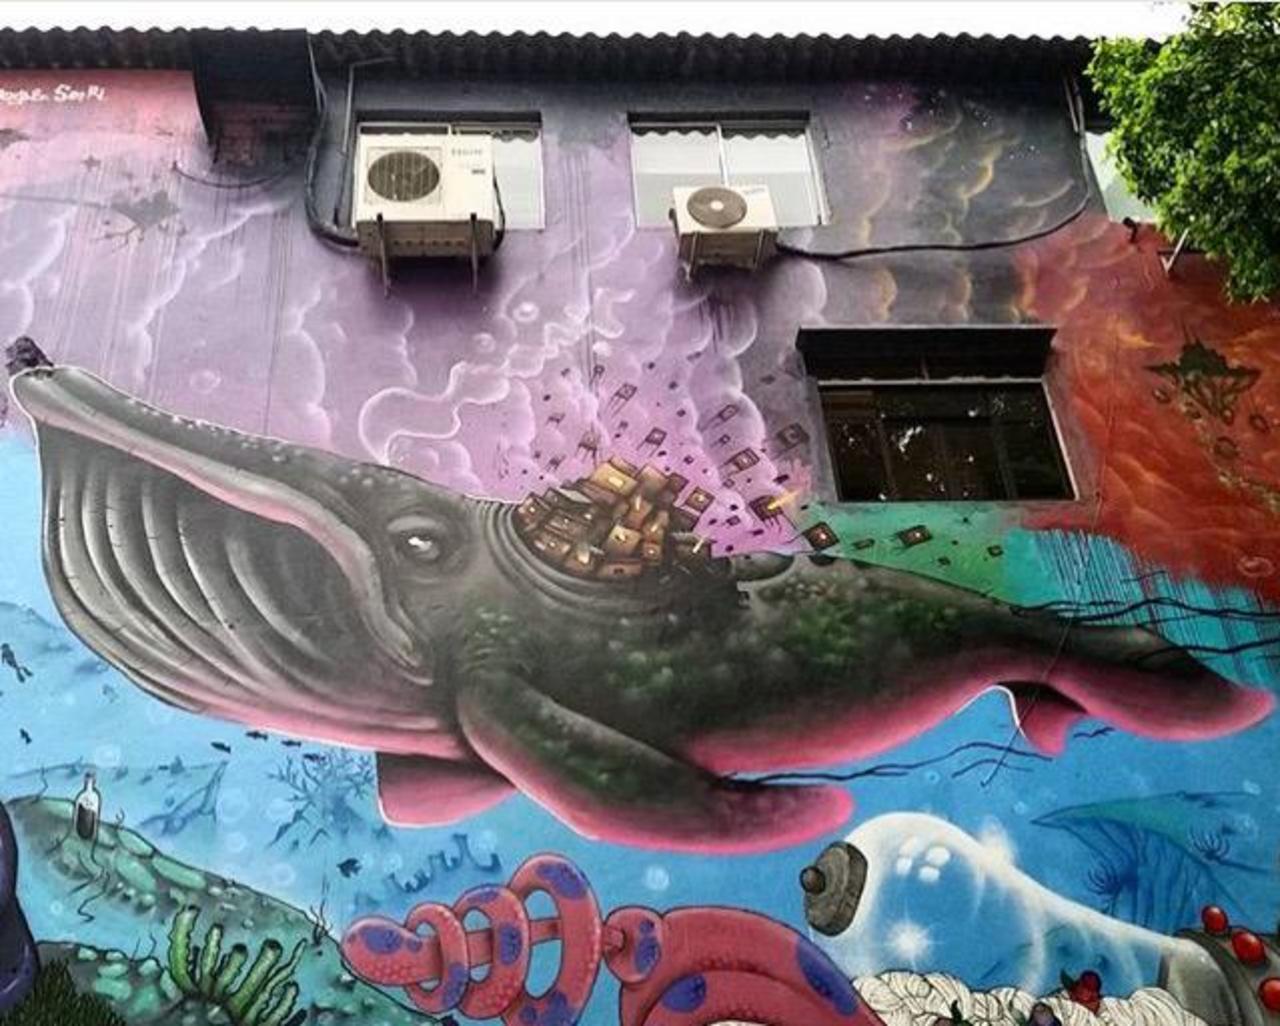 Street Art by joks_johnes Pinheiros, São Paulo 

#art #mural #graffiti #streetart http://t.co/rY5QpW6tHu